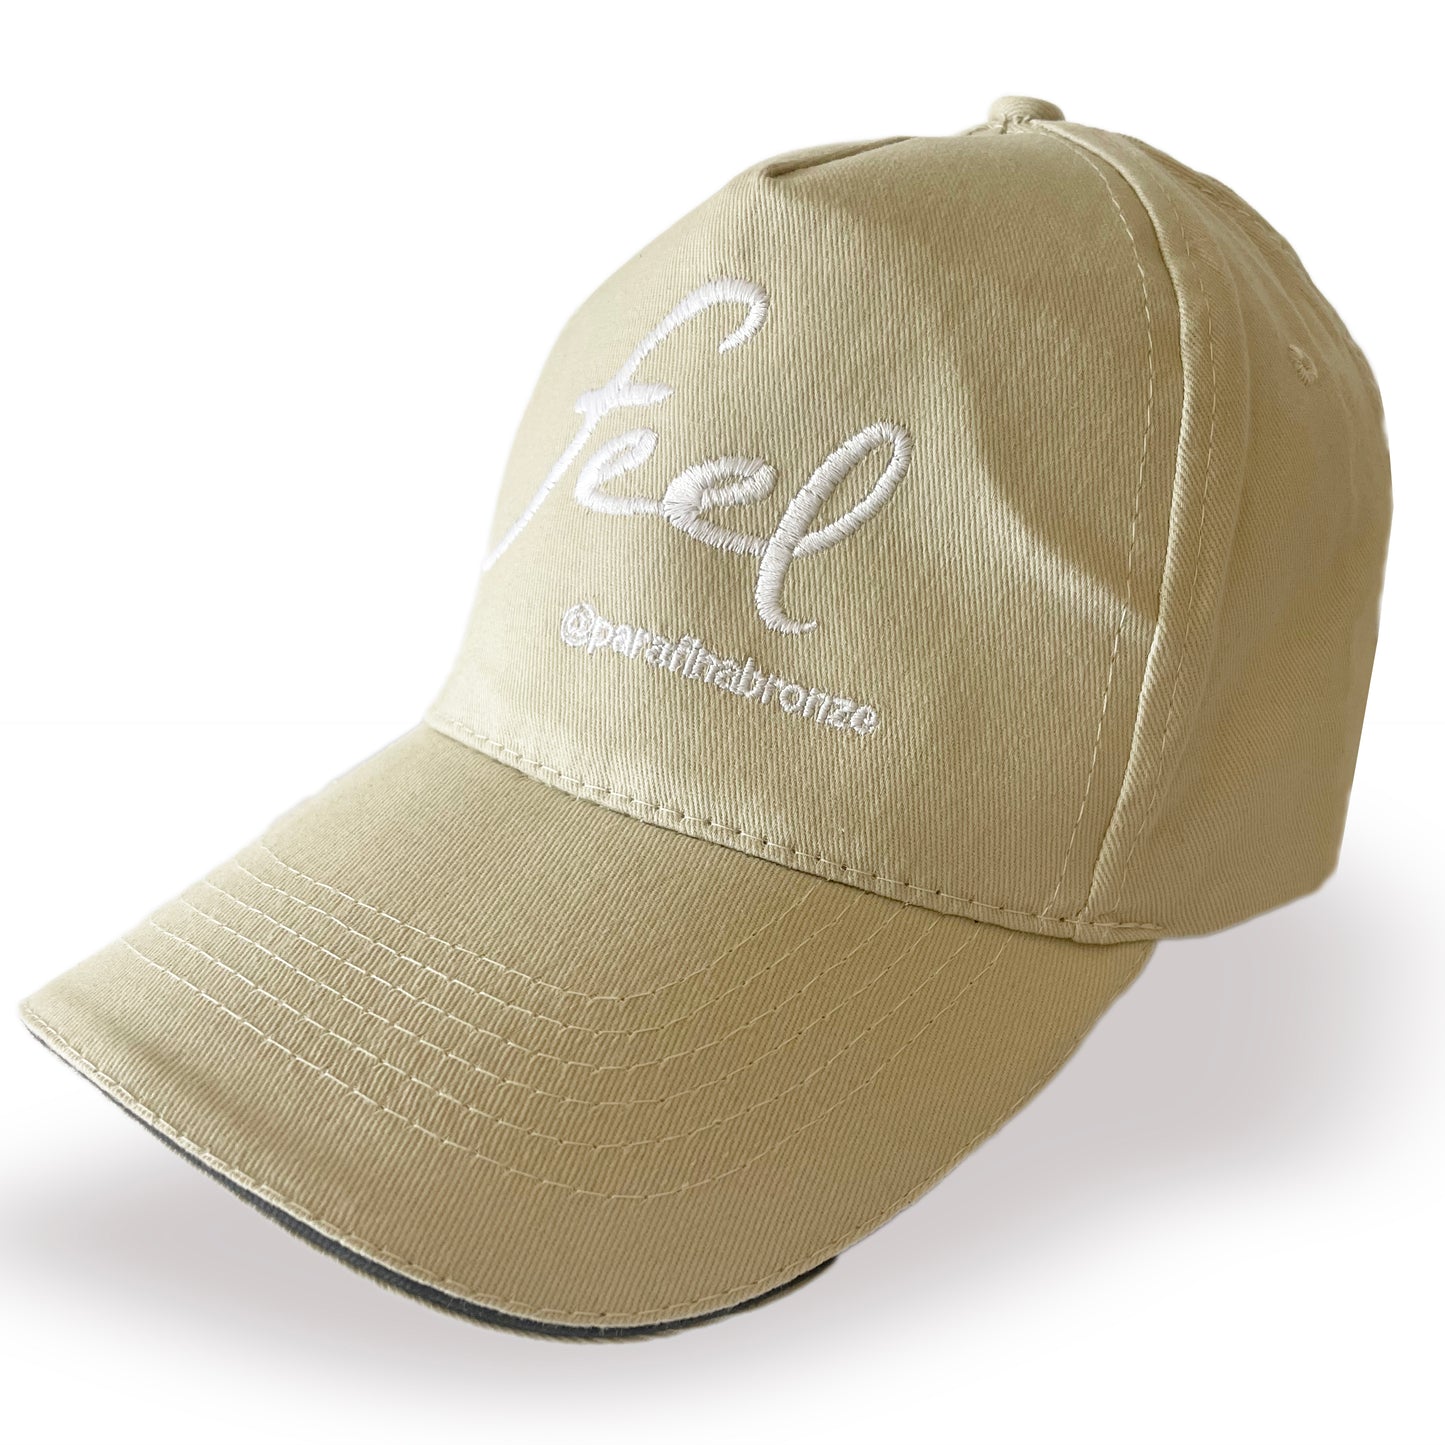 Adjustable FEEL twill cap with metal buckle